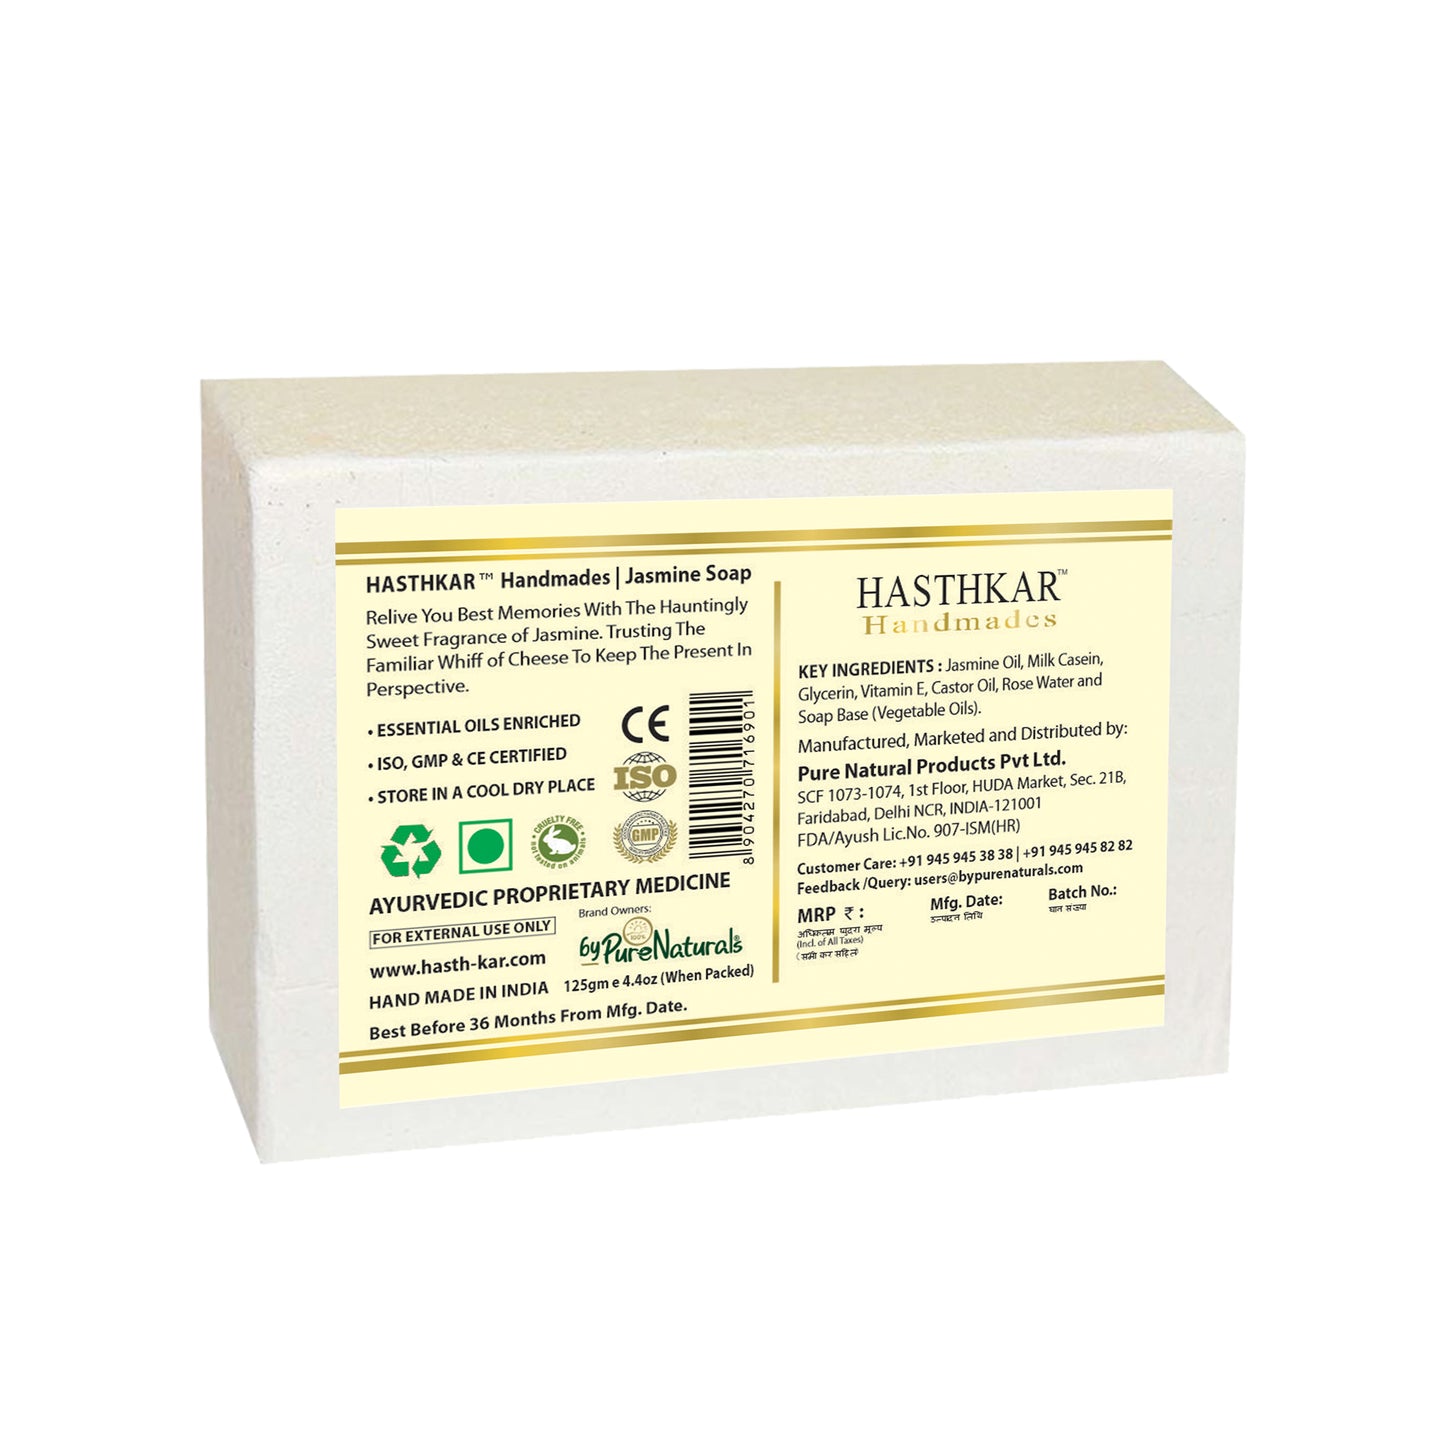 Hasthkar Handmades Glycerine Jasmine Soap 125gm Pack of 6